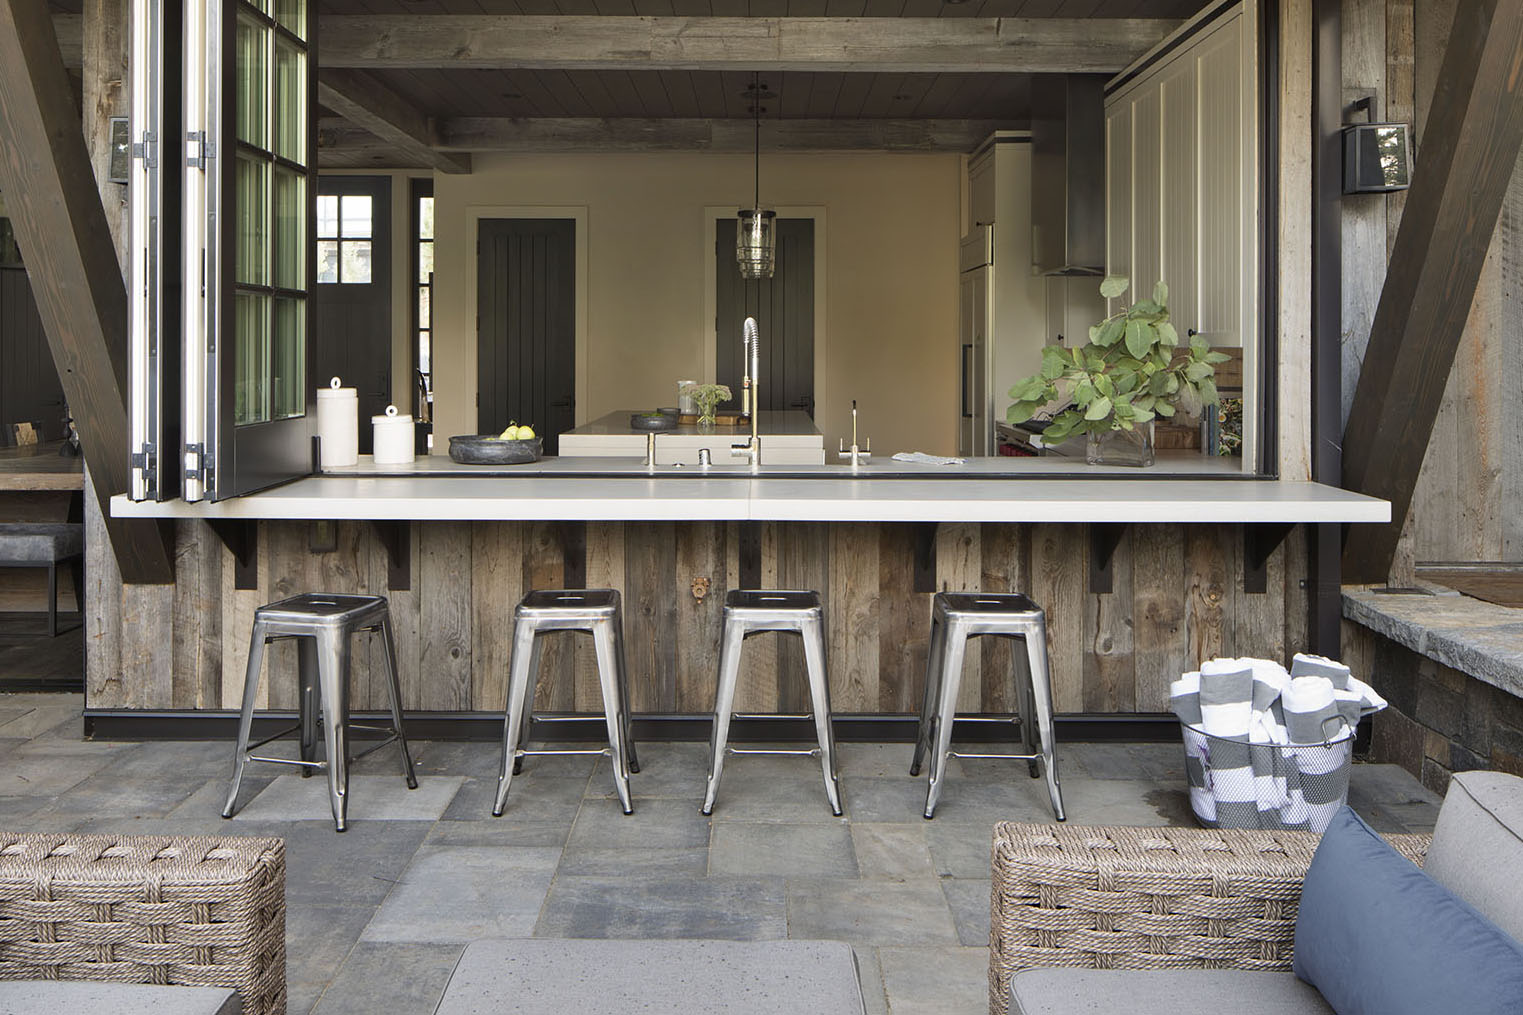 Concrete Outdoor Kitchen